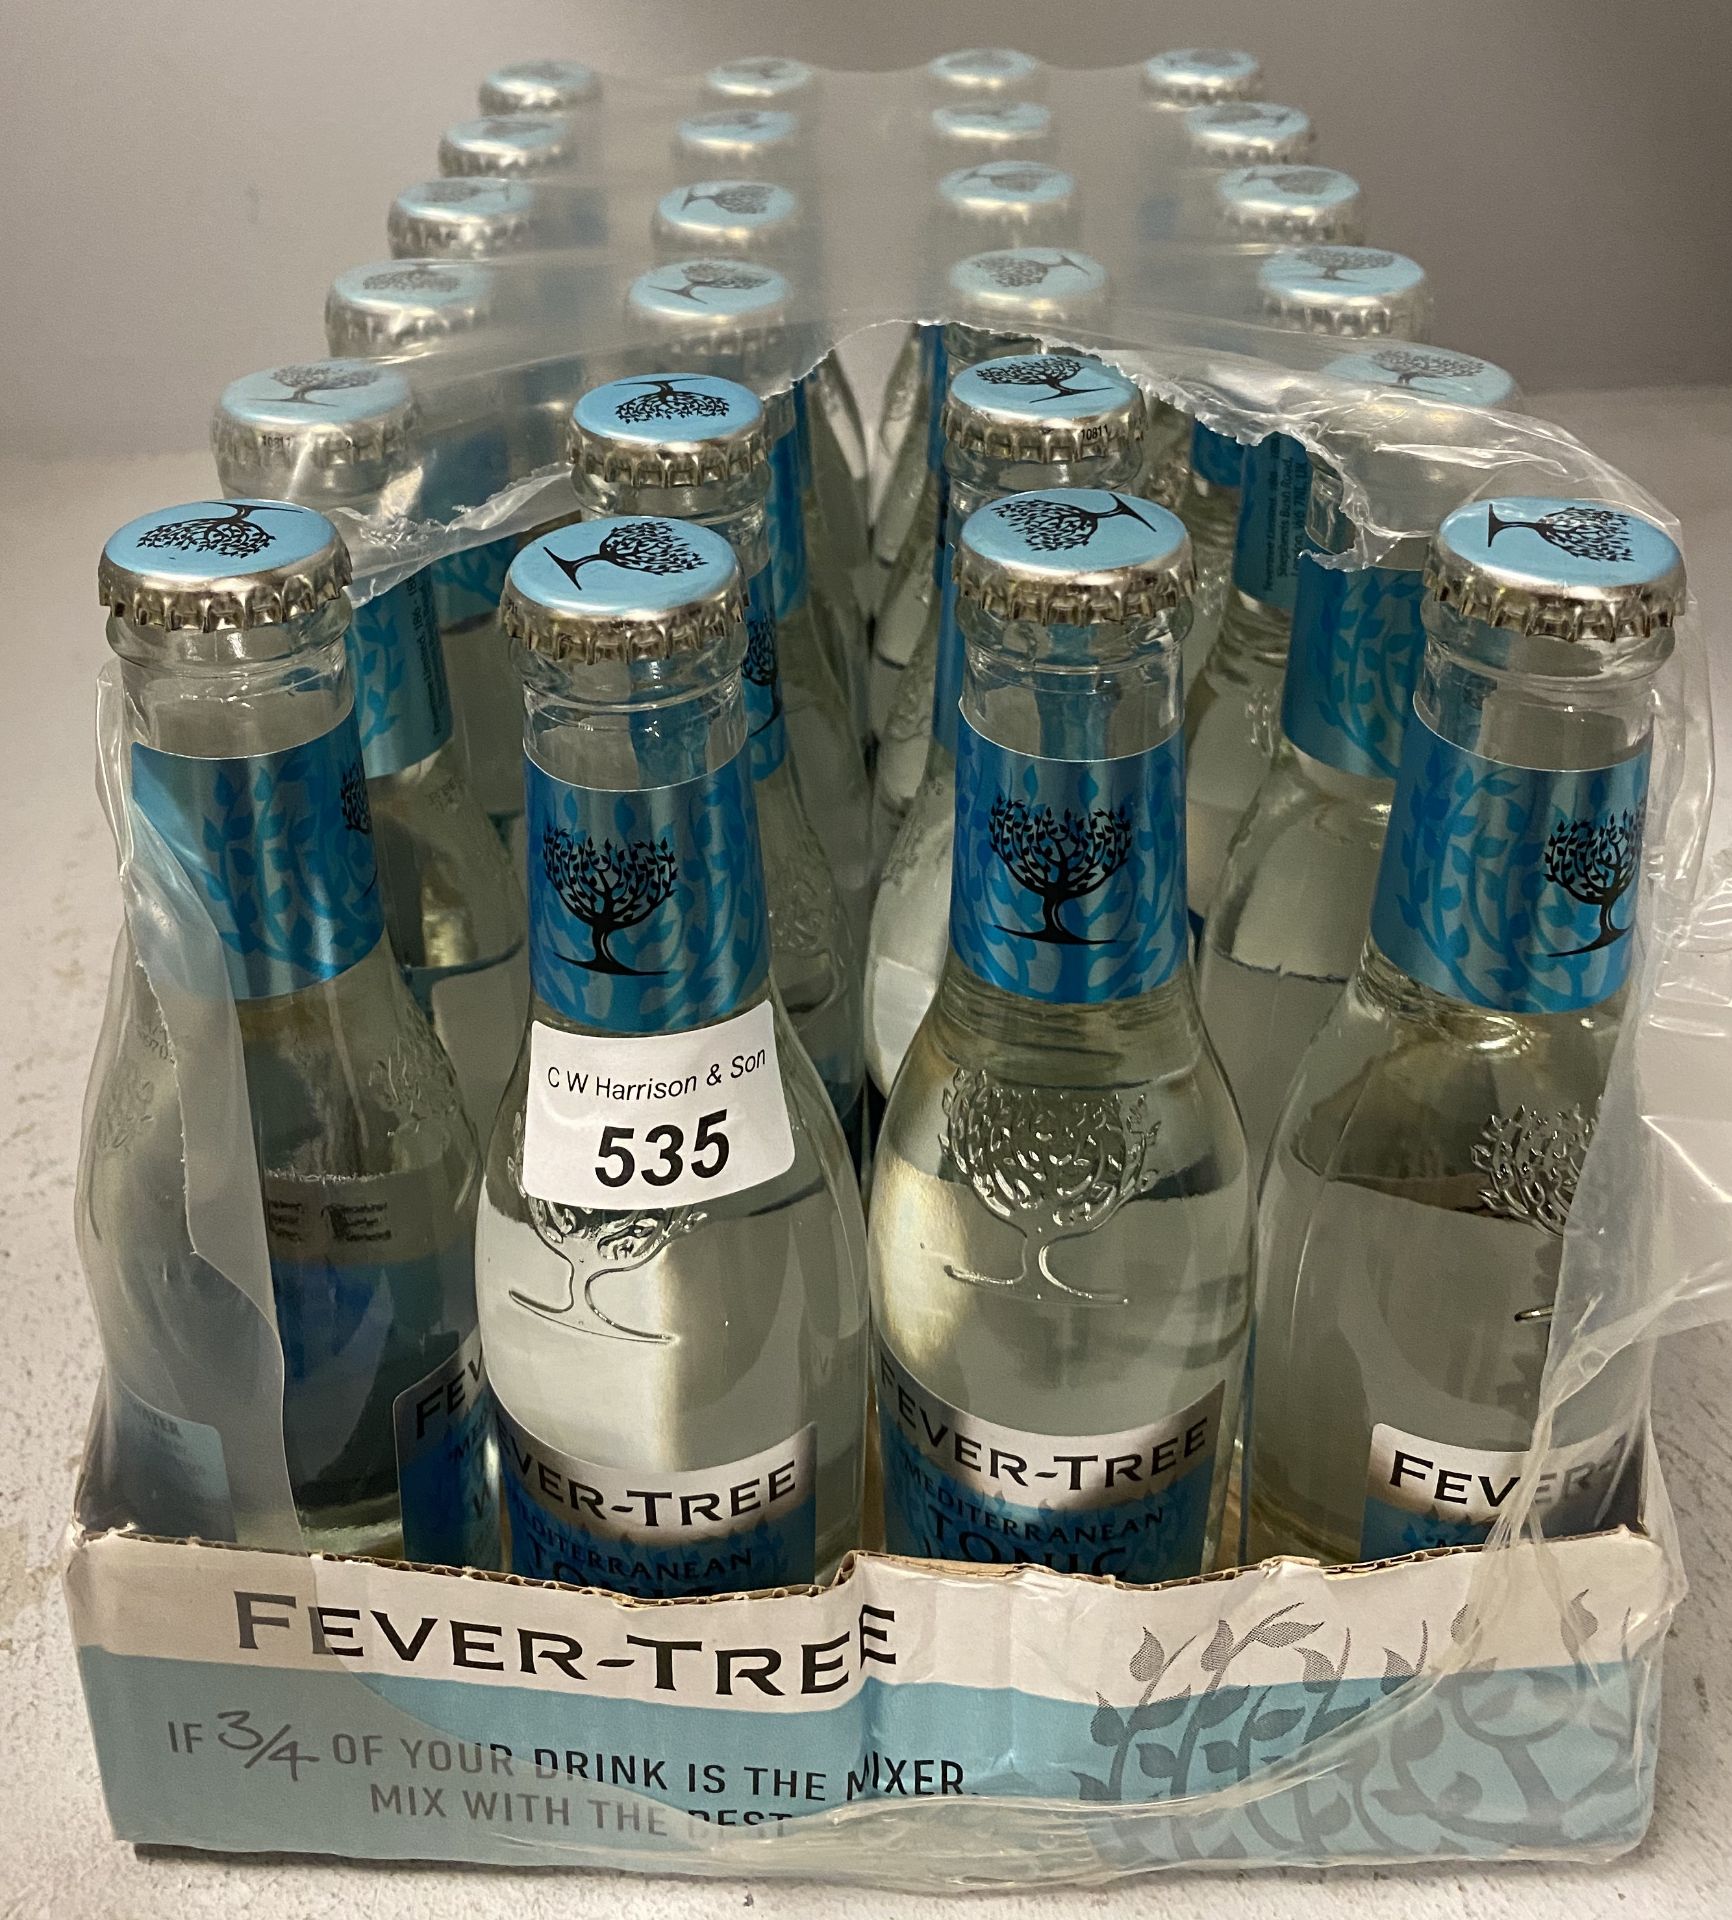 24 x 200ml bottles of Fever Tree Mediterranean Tonic Water